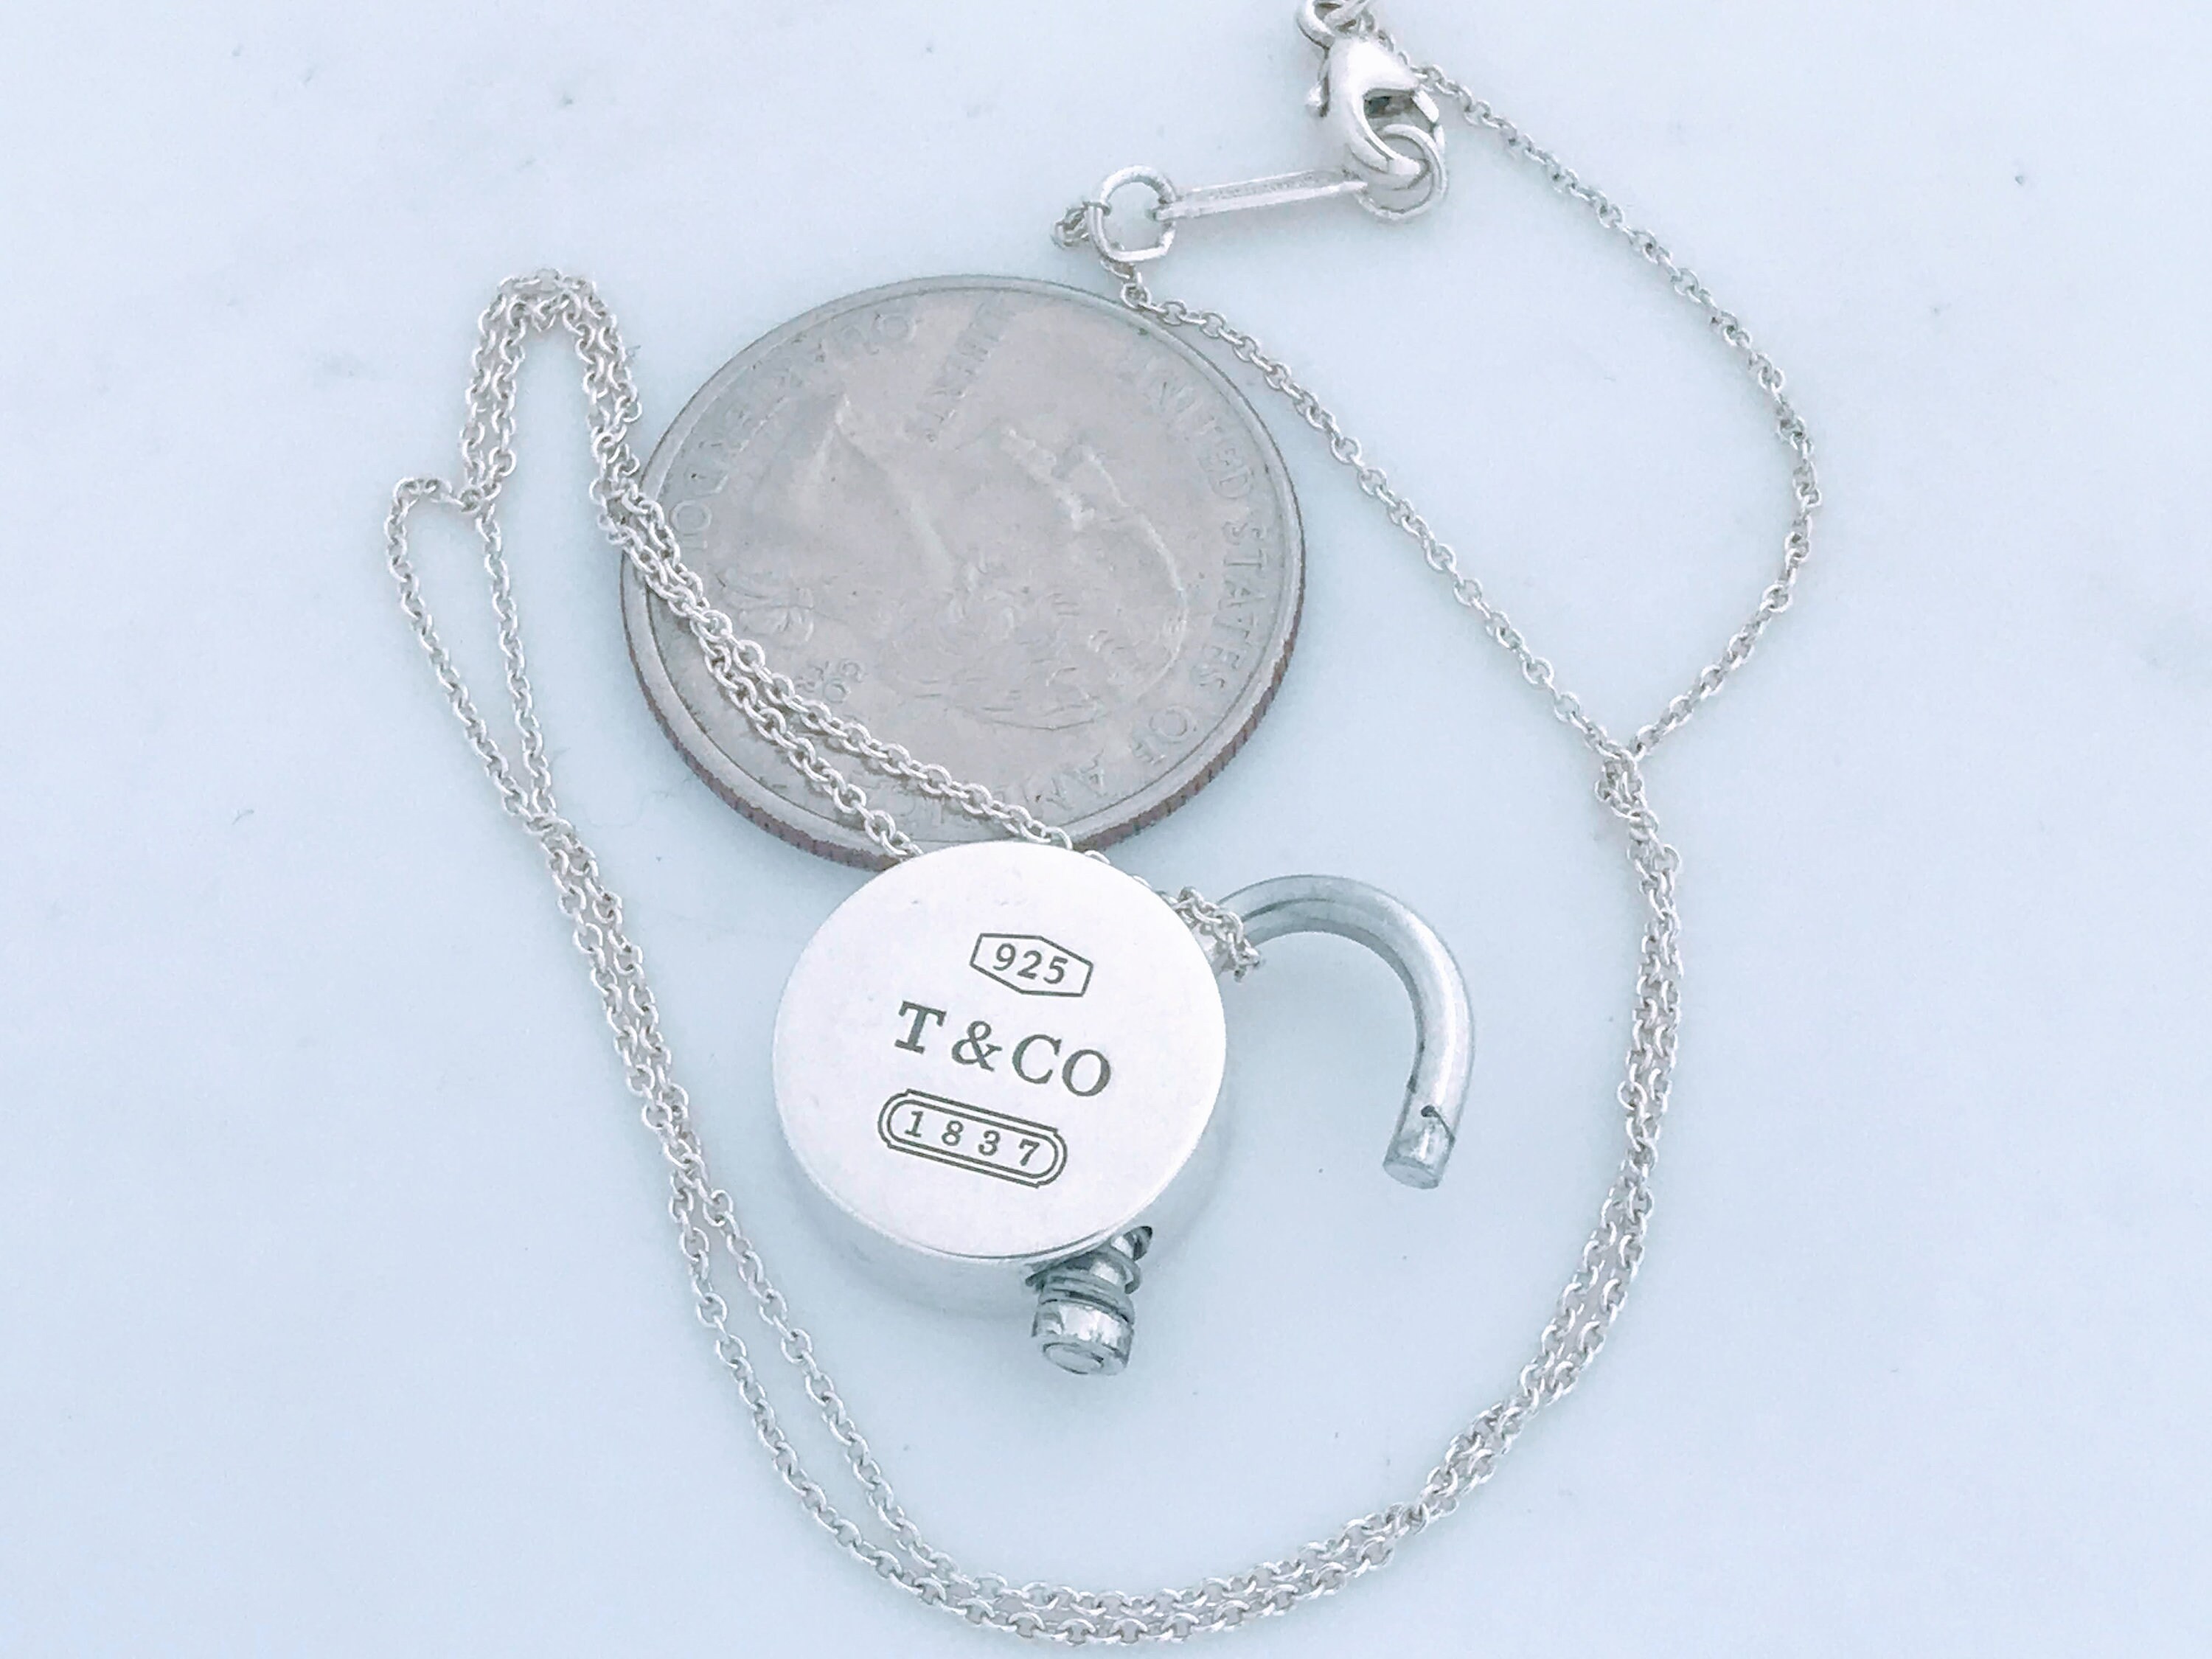 Tiffany & Co. 1837 Lock Padlock Pendant Necklace 16 Silver 925 w/Bag  m1075-2